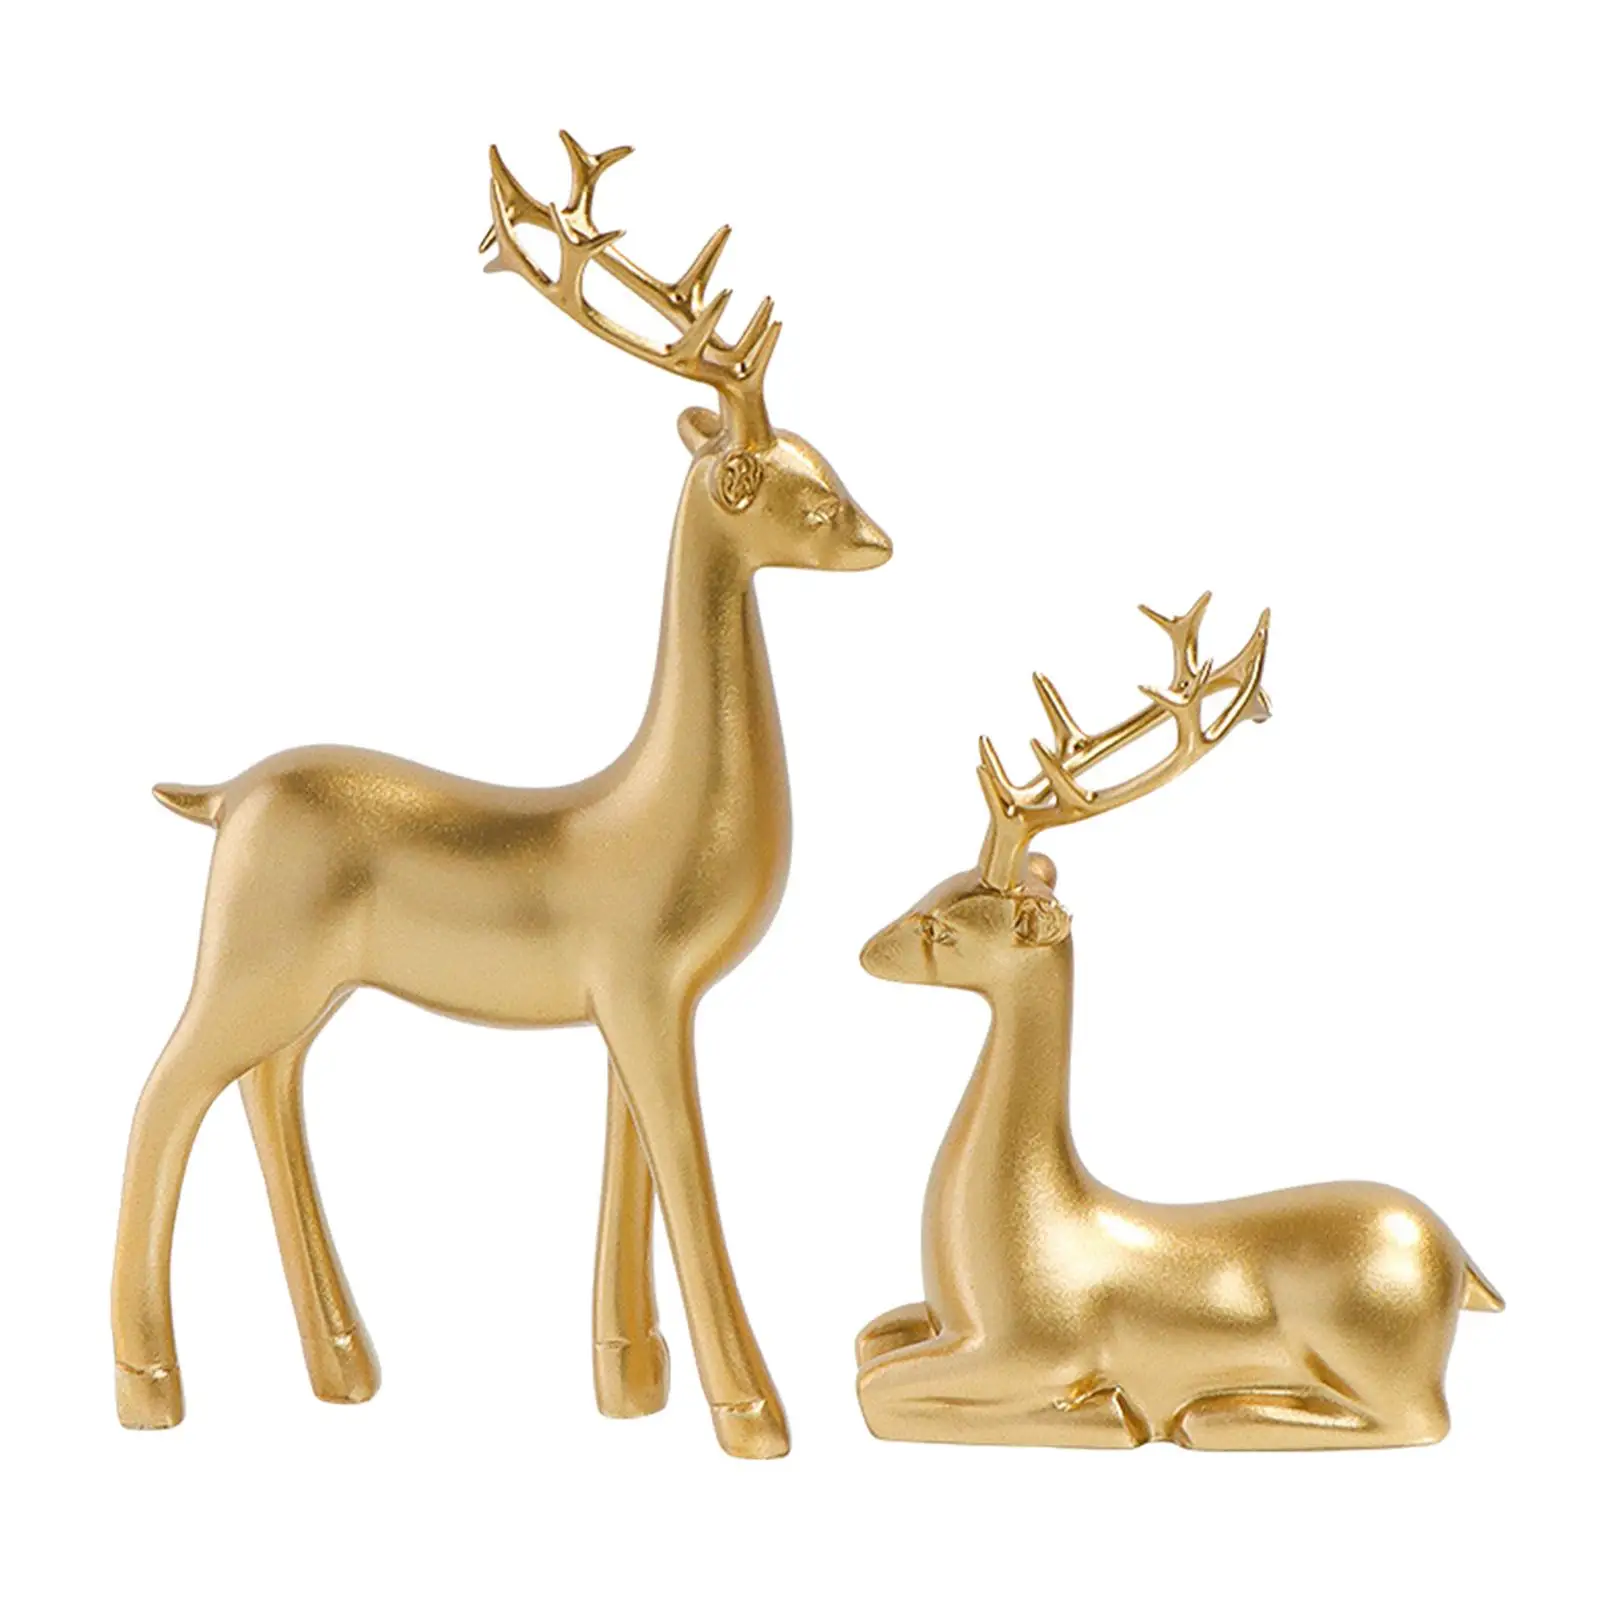 Resin Deer Sculpture 2 Pieces Reindeer Figurines Decorative Art Collection Accessory for Home Cabinet Desktop Tabletop Ornament